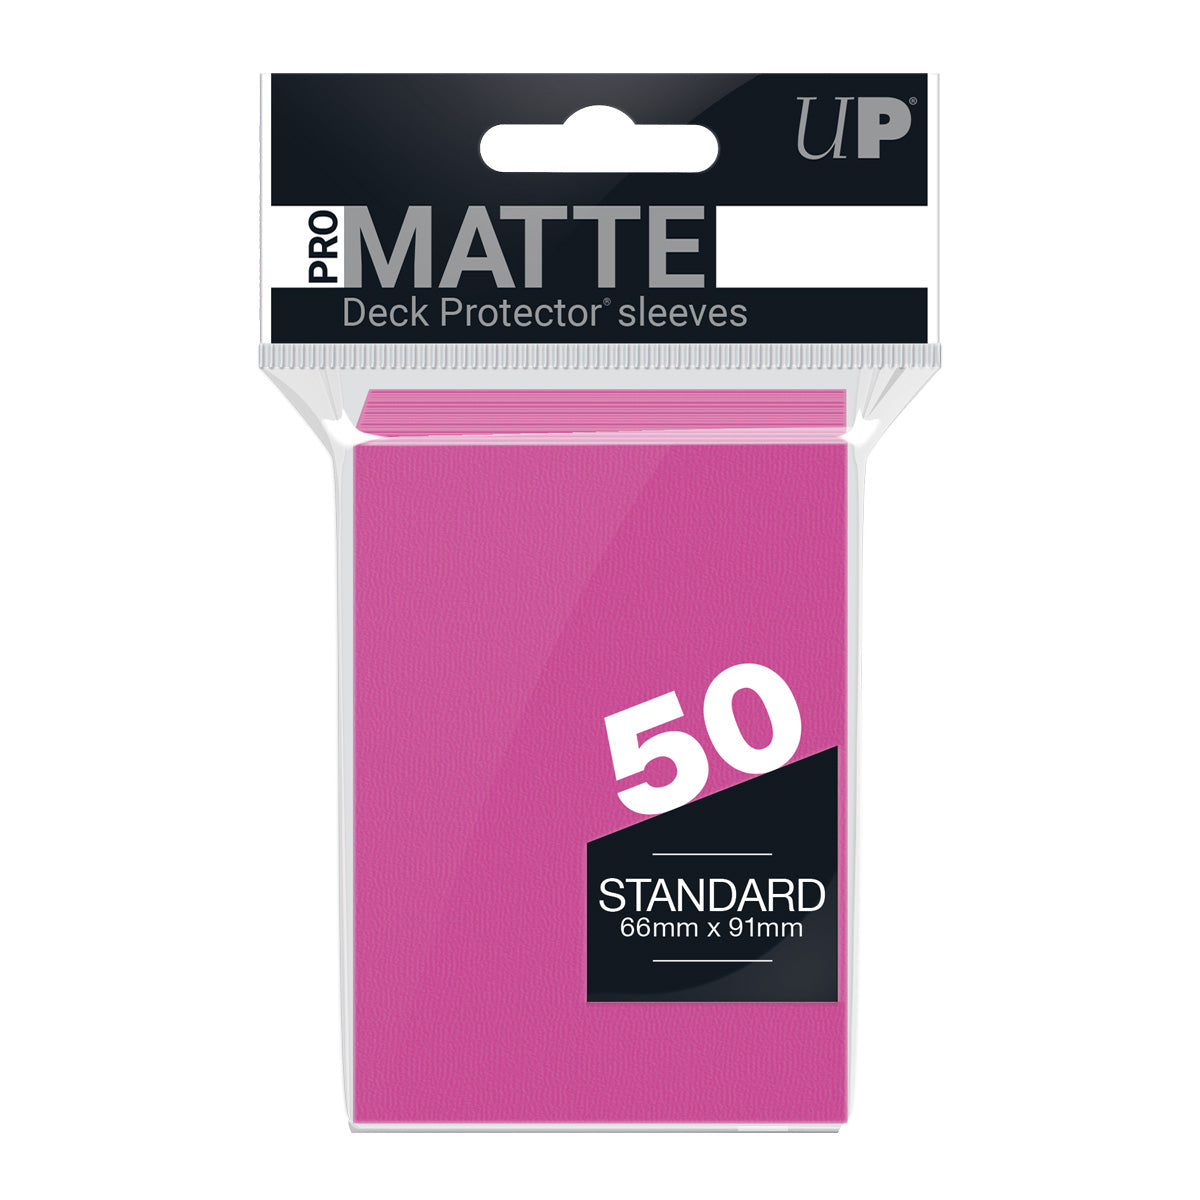 Ultra PRO Card Sleeve Pro-Matte Standard 50ct - Bright Pink